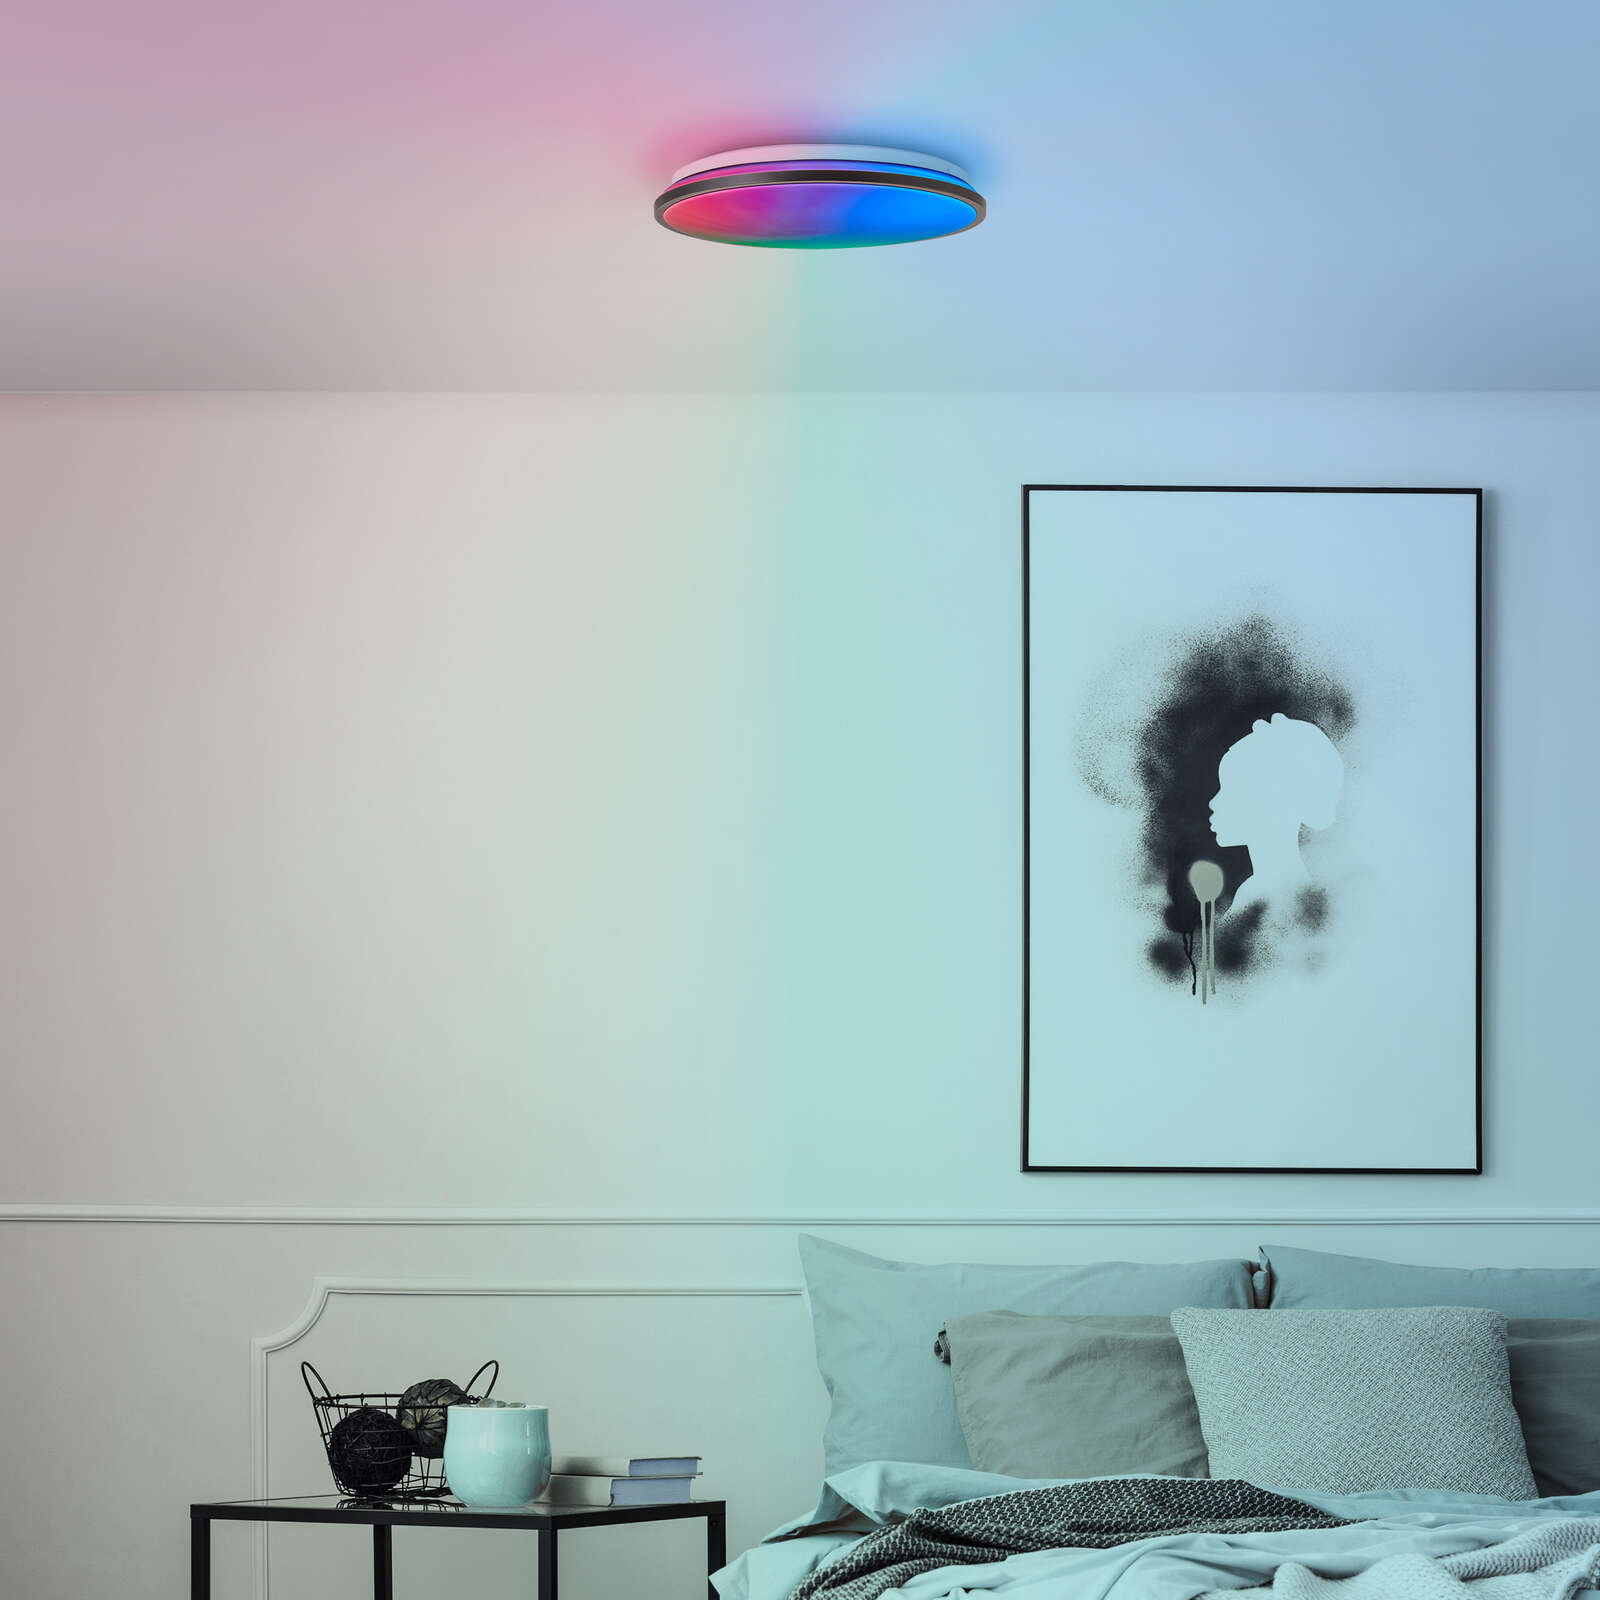             Plastic ceiling light - Iva 1 - Black
        